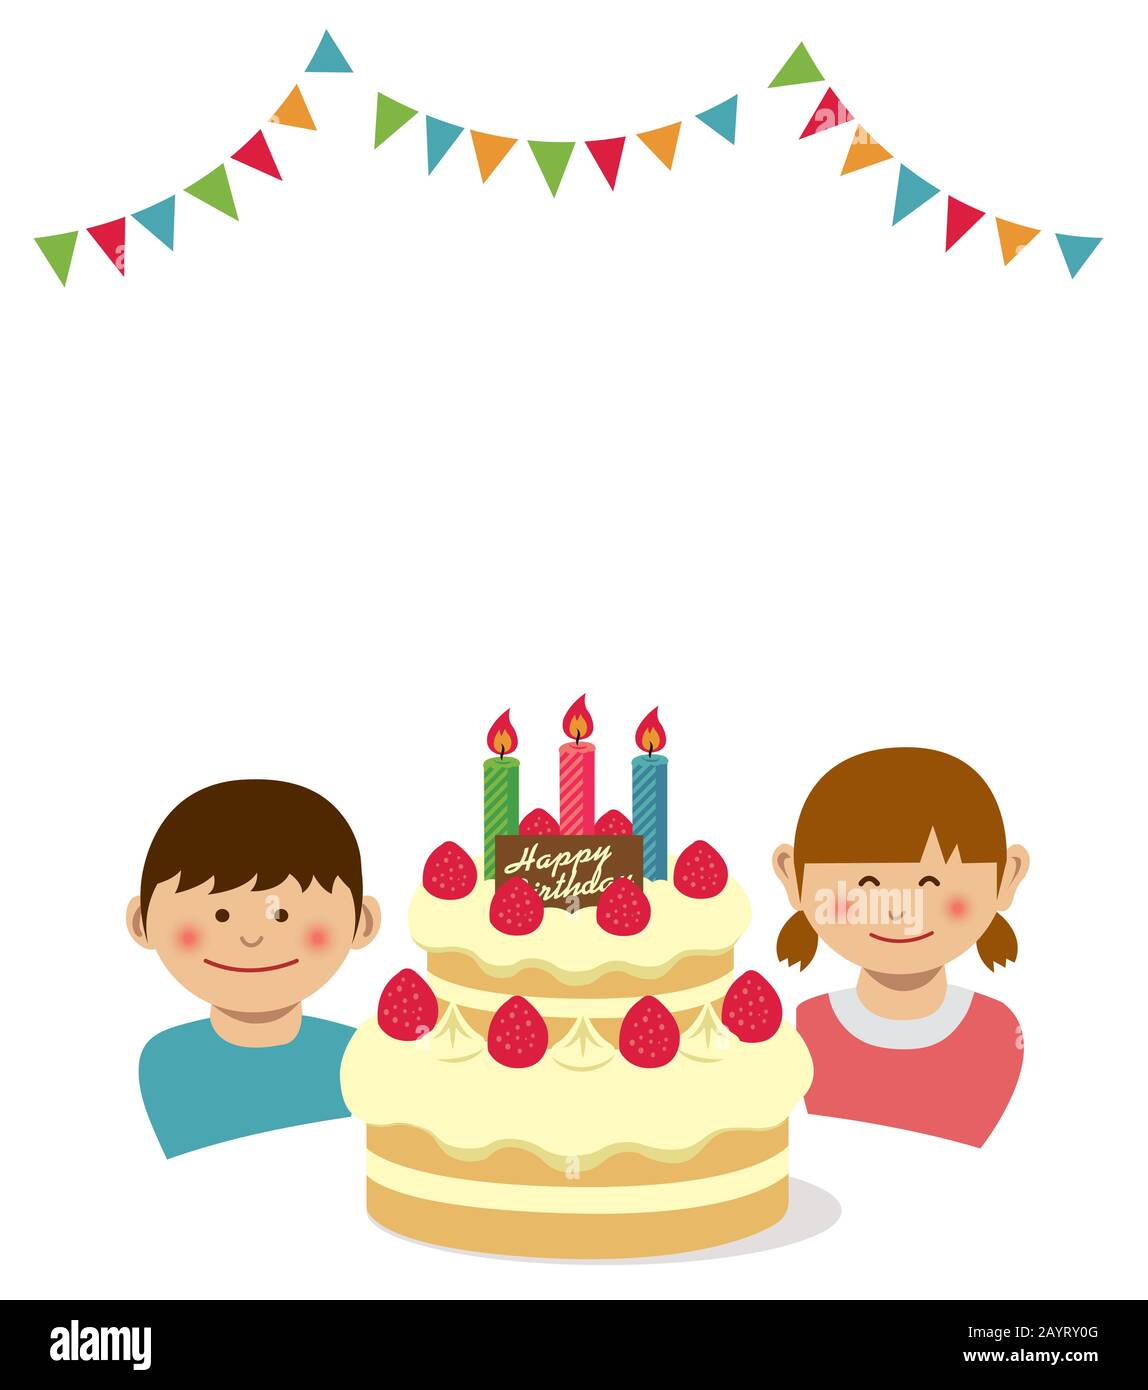 Happy birthday.Birthday cake and kids illustration. Stock Vector